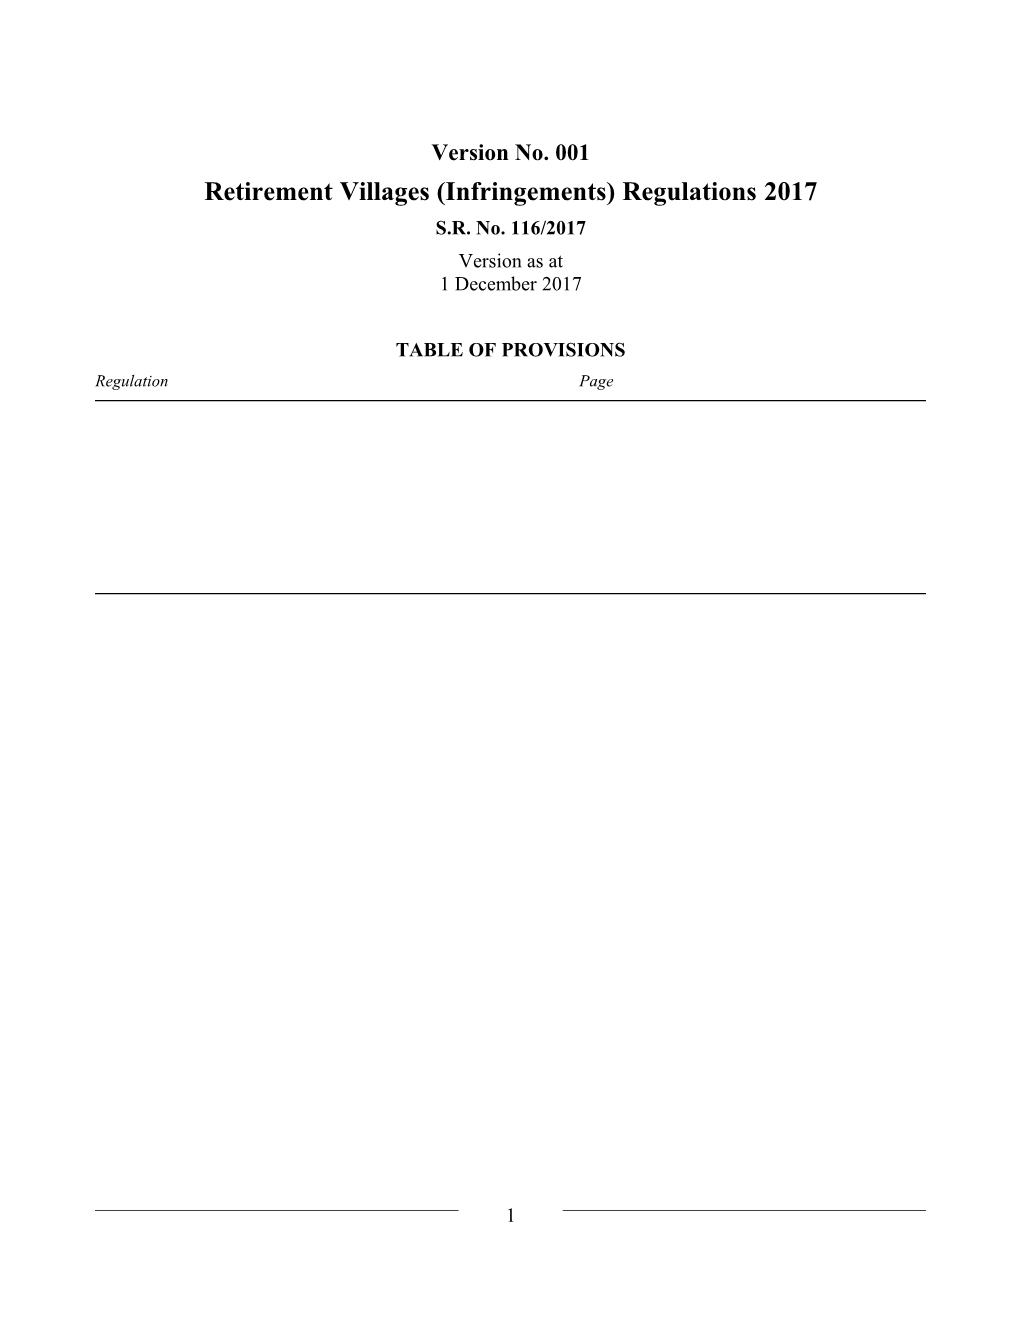 Retirement Villages (Infringements) Regulations 2017